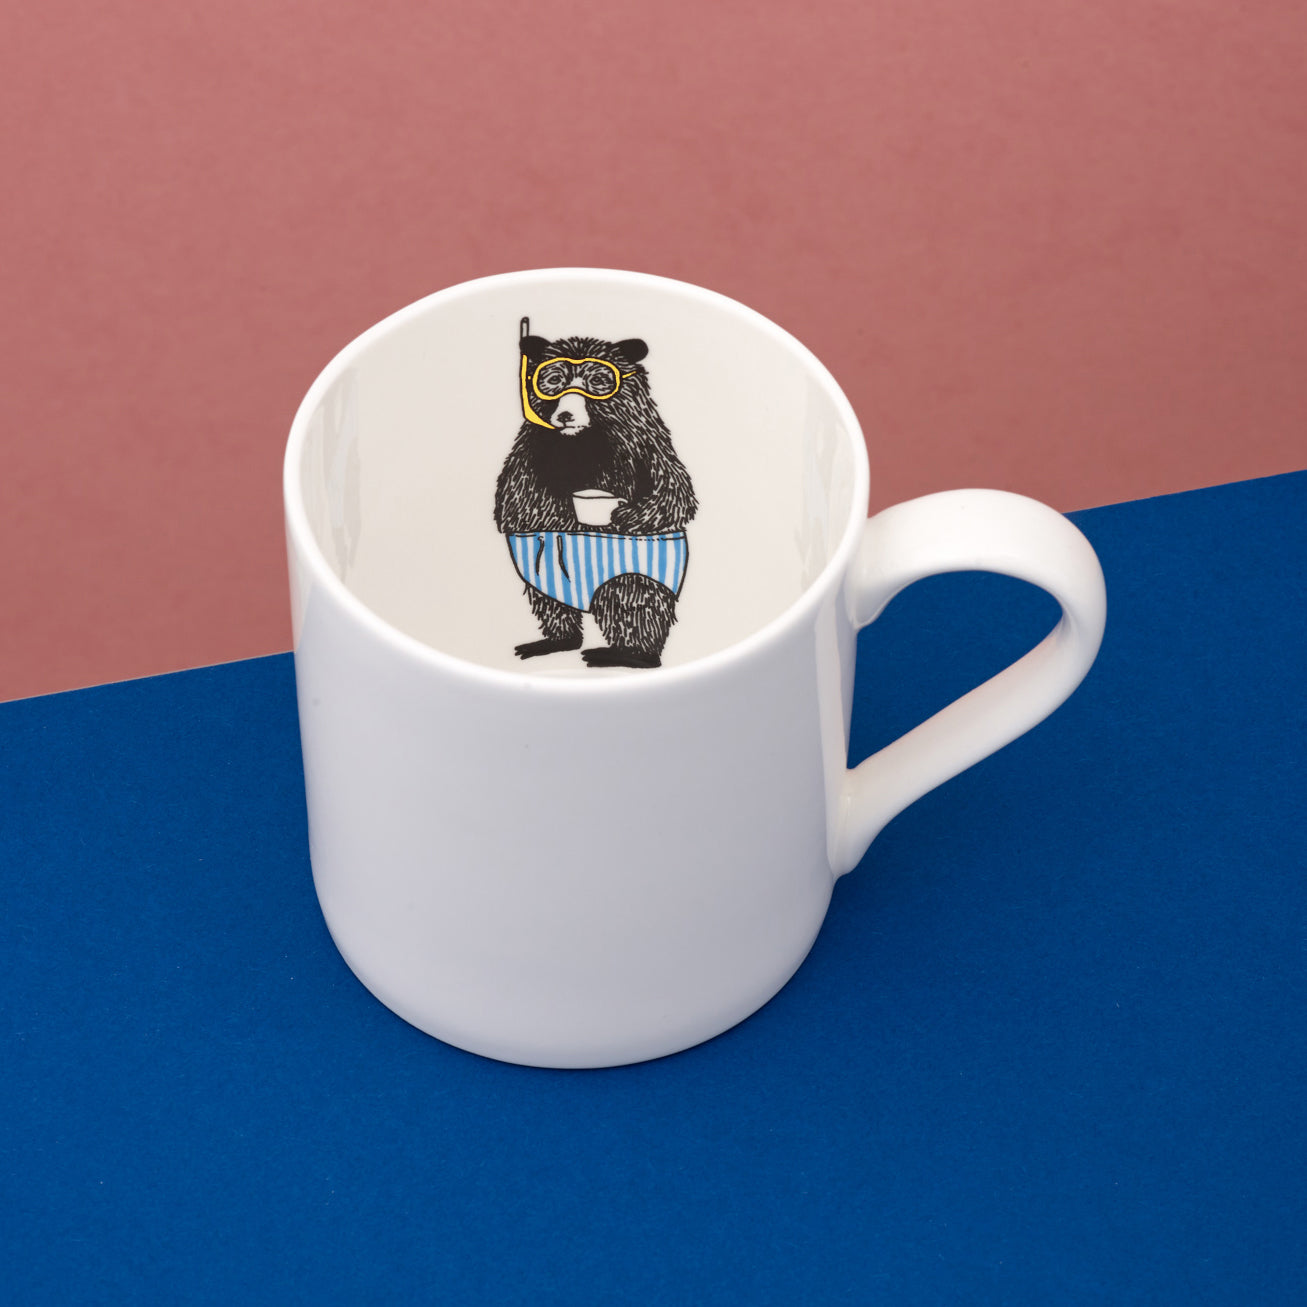 Mr Bear is inside your mug